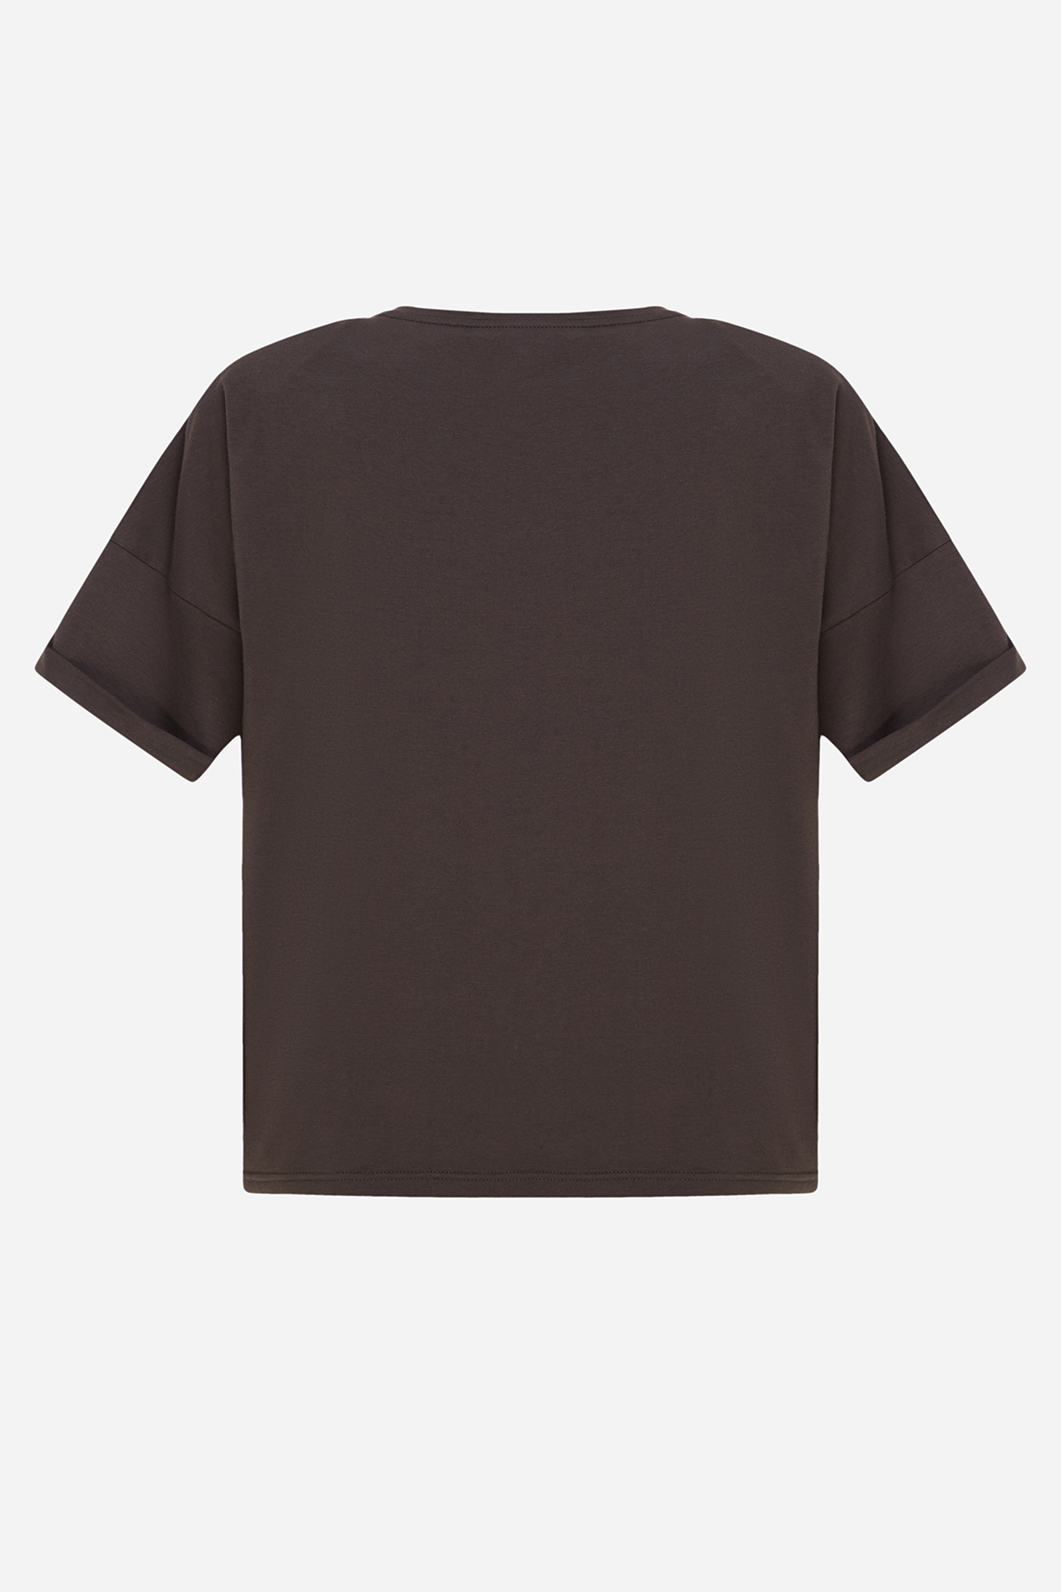 Brown color
T-shirt